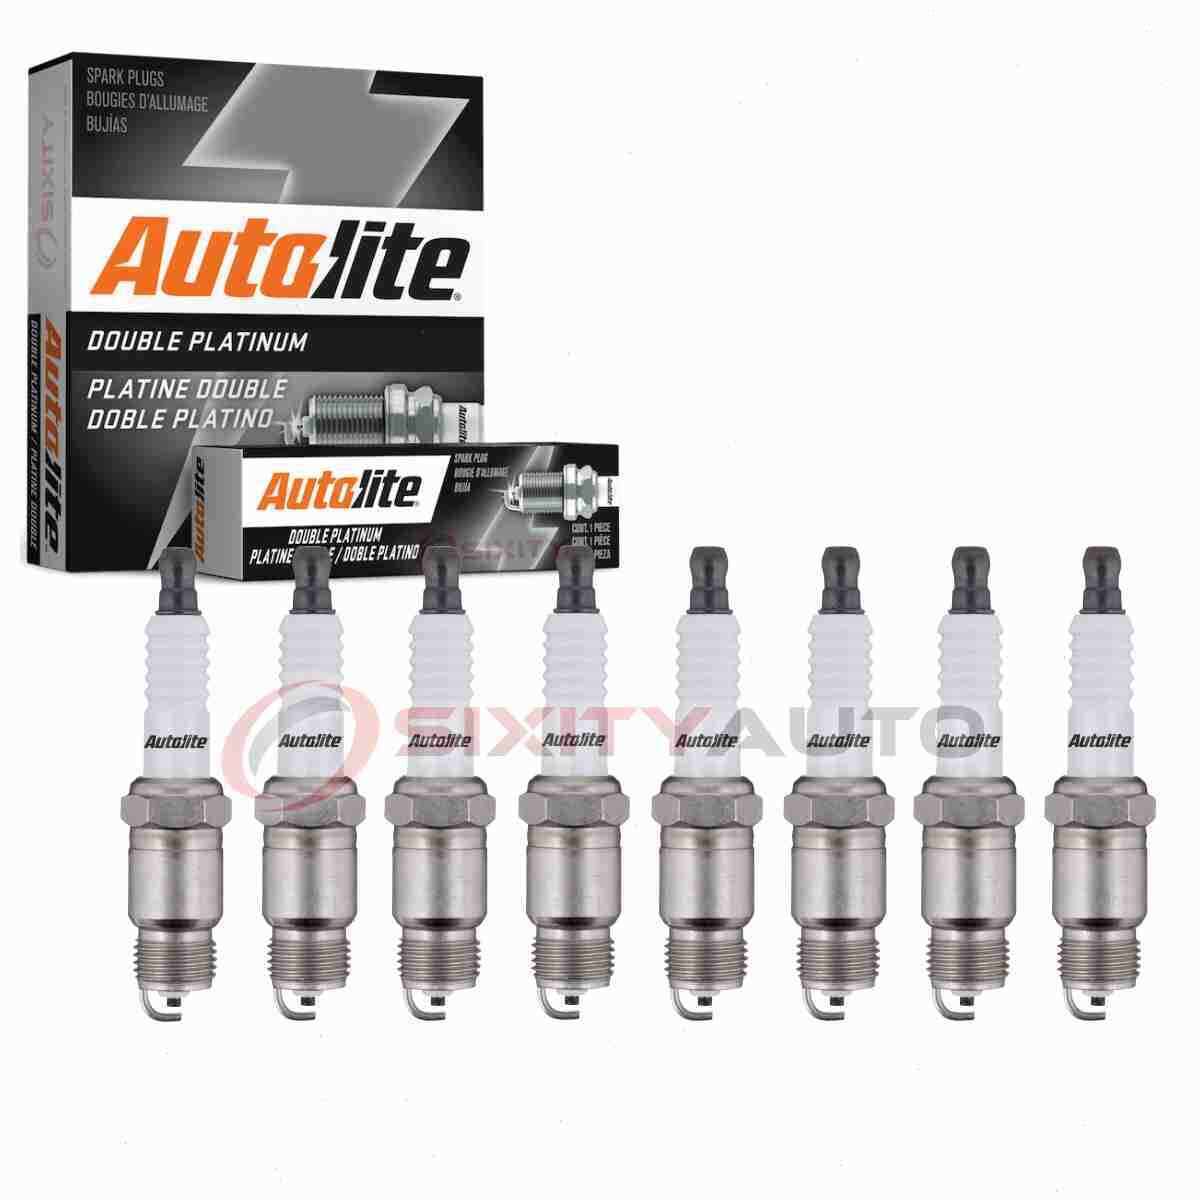 8 pc Autolite Double Platinum Spark Plugs for 1978-1984 Oldsmobile Cutlass pv